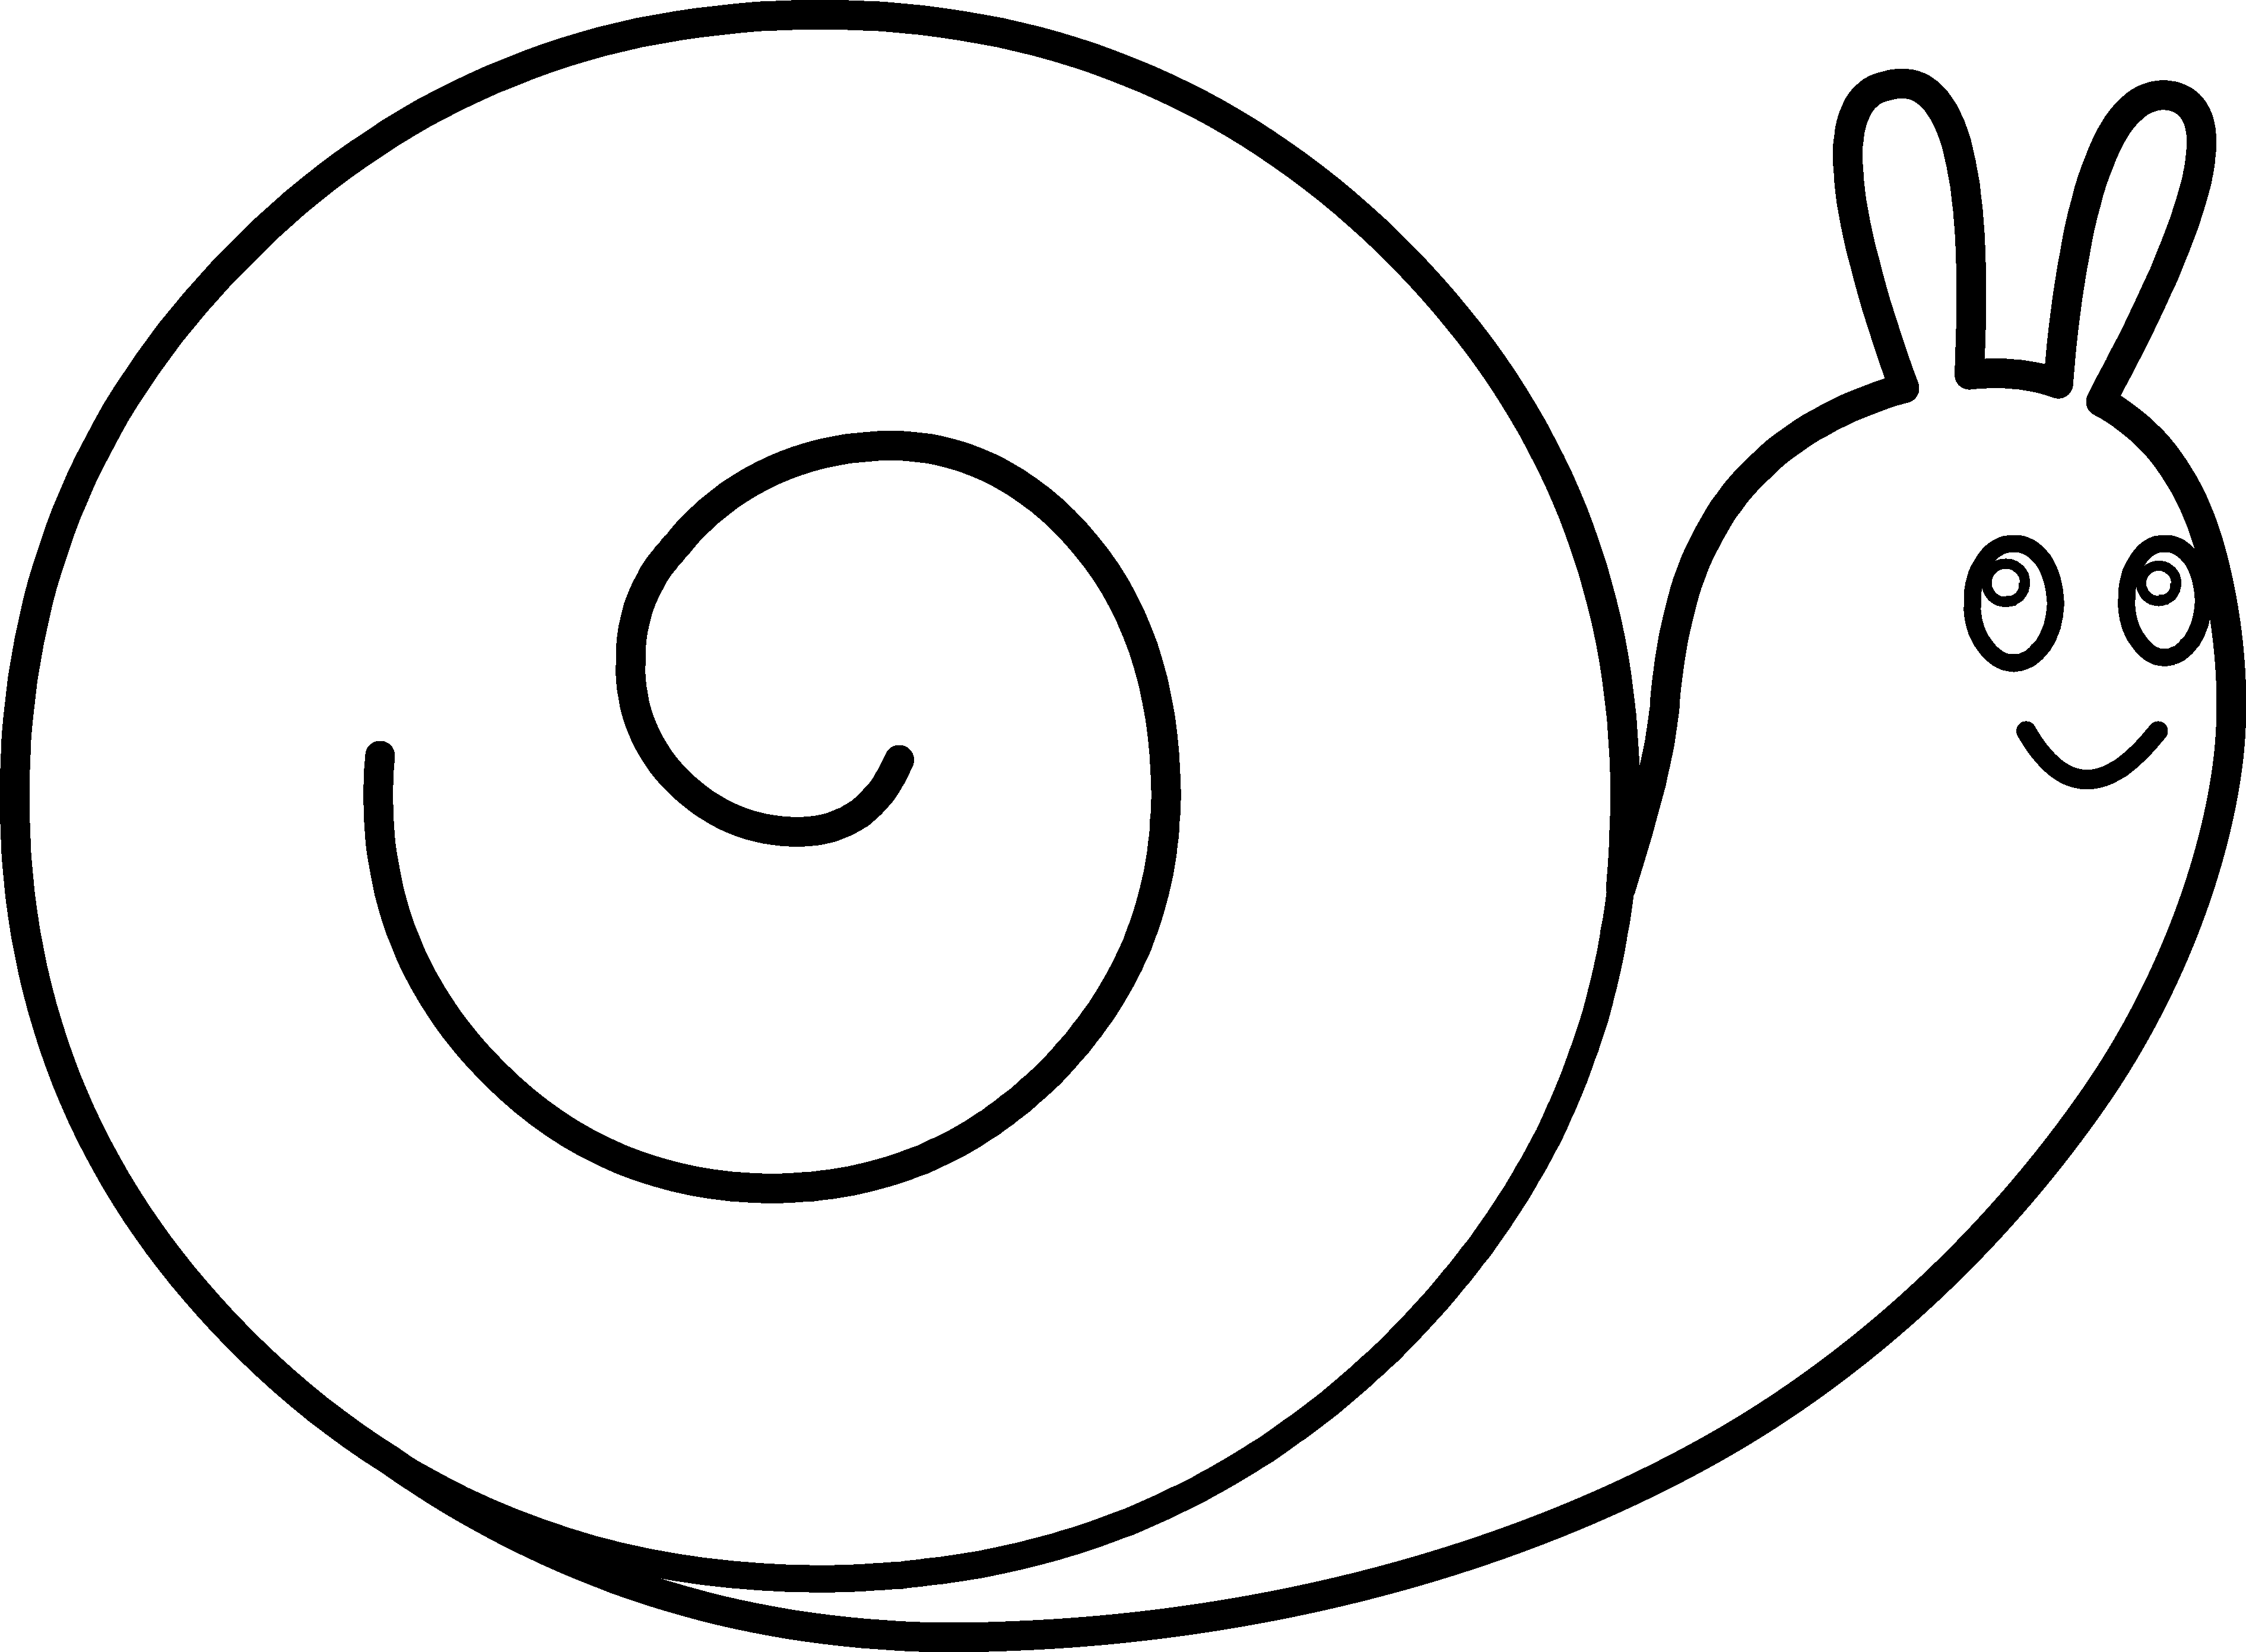 Snail clipart 5